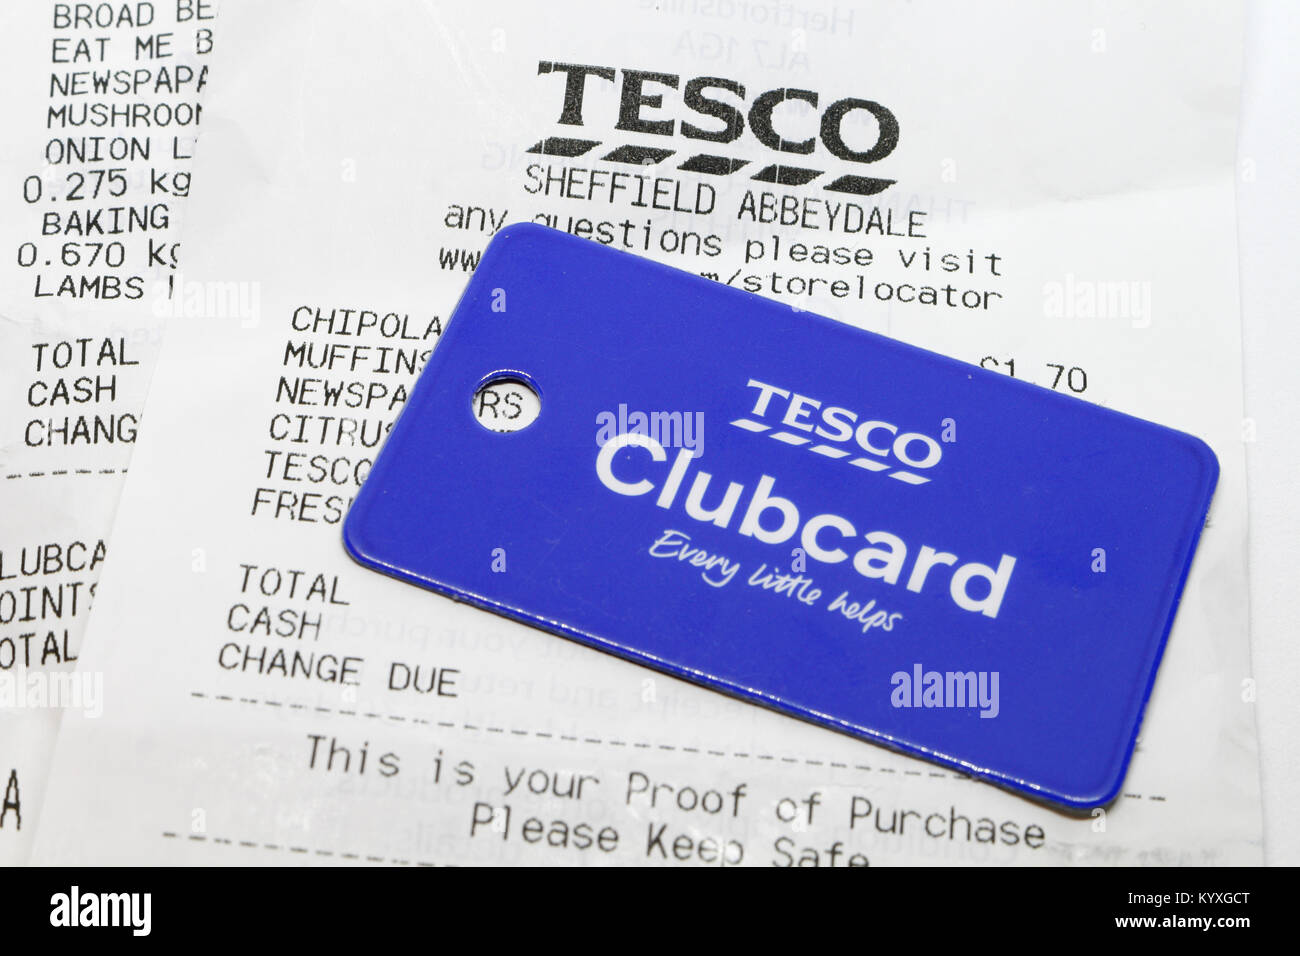 Tesco clubcard and receipt Stock Photo